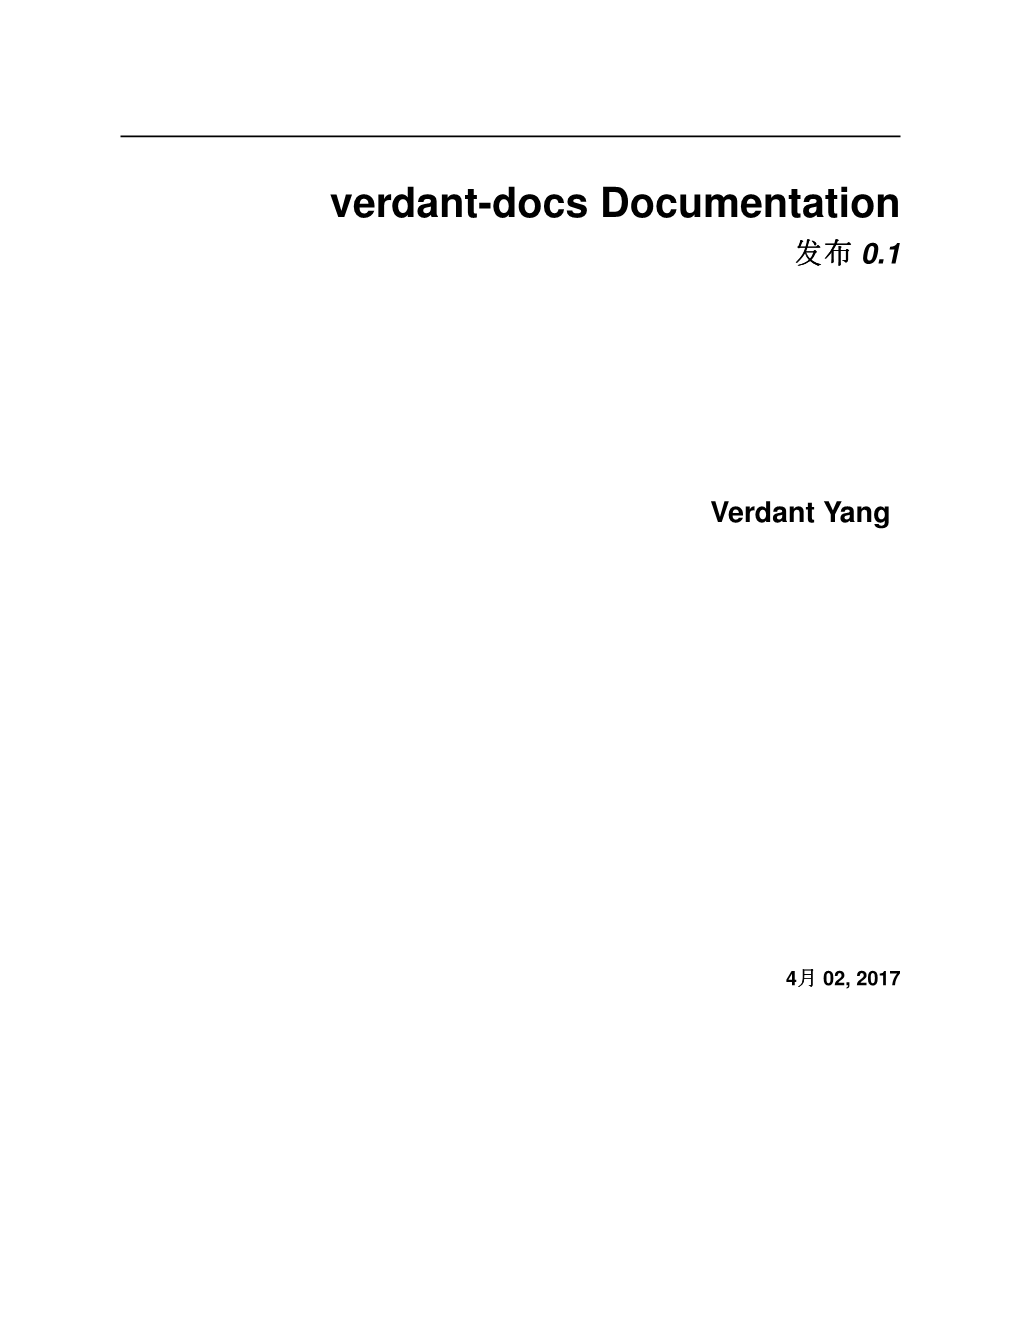 Verdant-Docs Documentation 发发发布布布 0.1